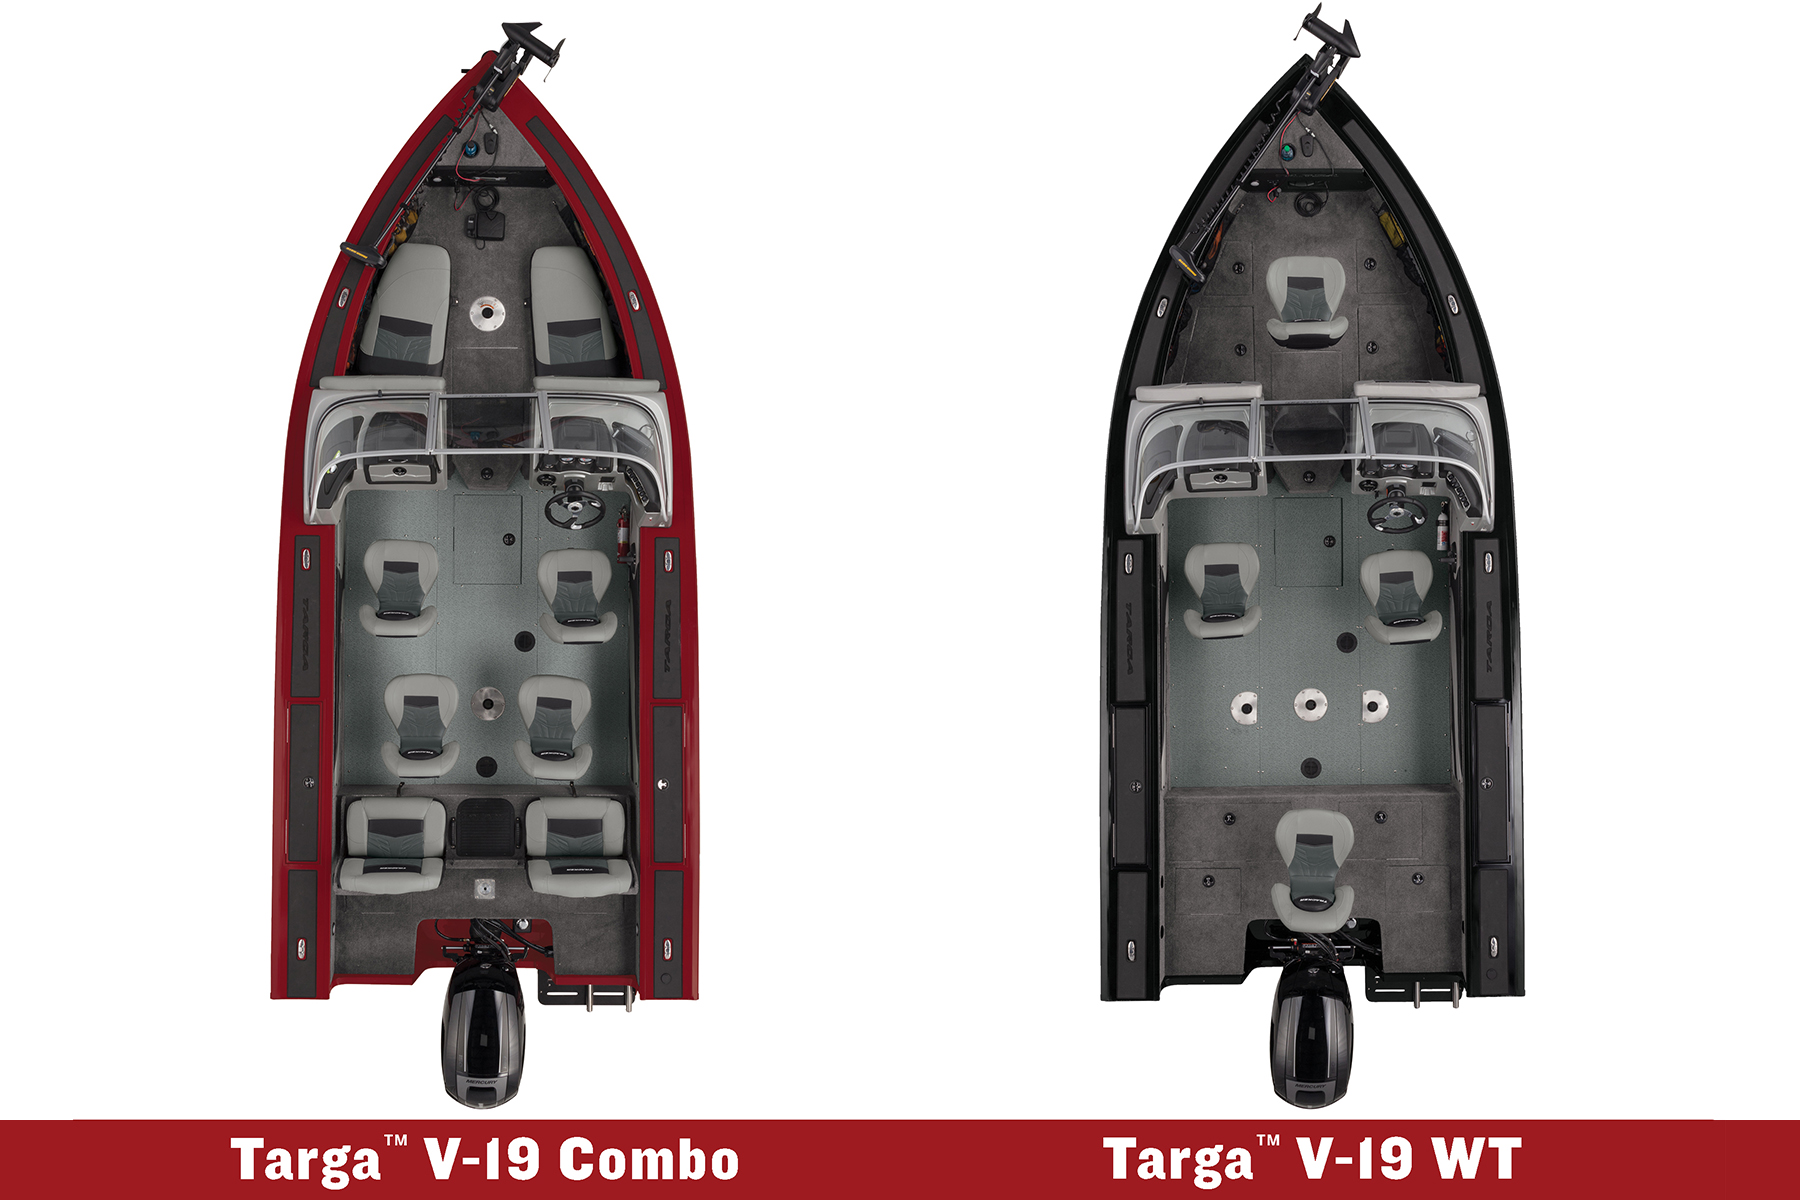 Targa v19 combo and v19 WT